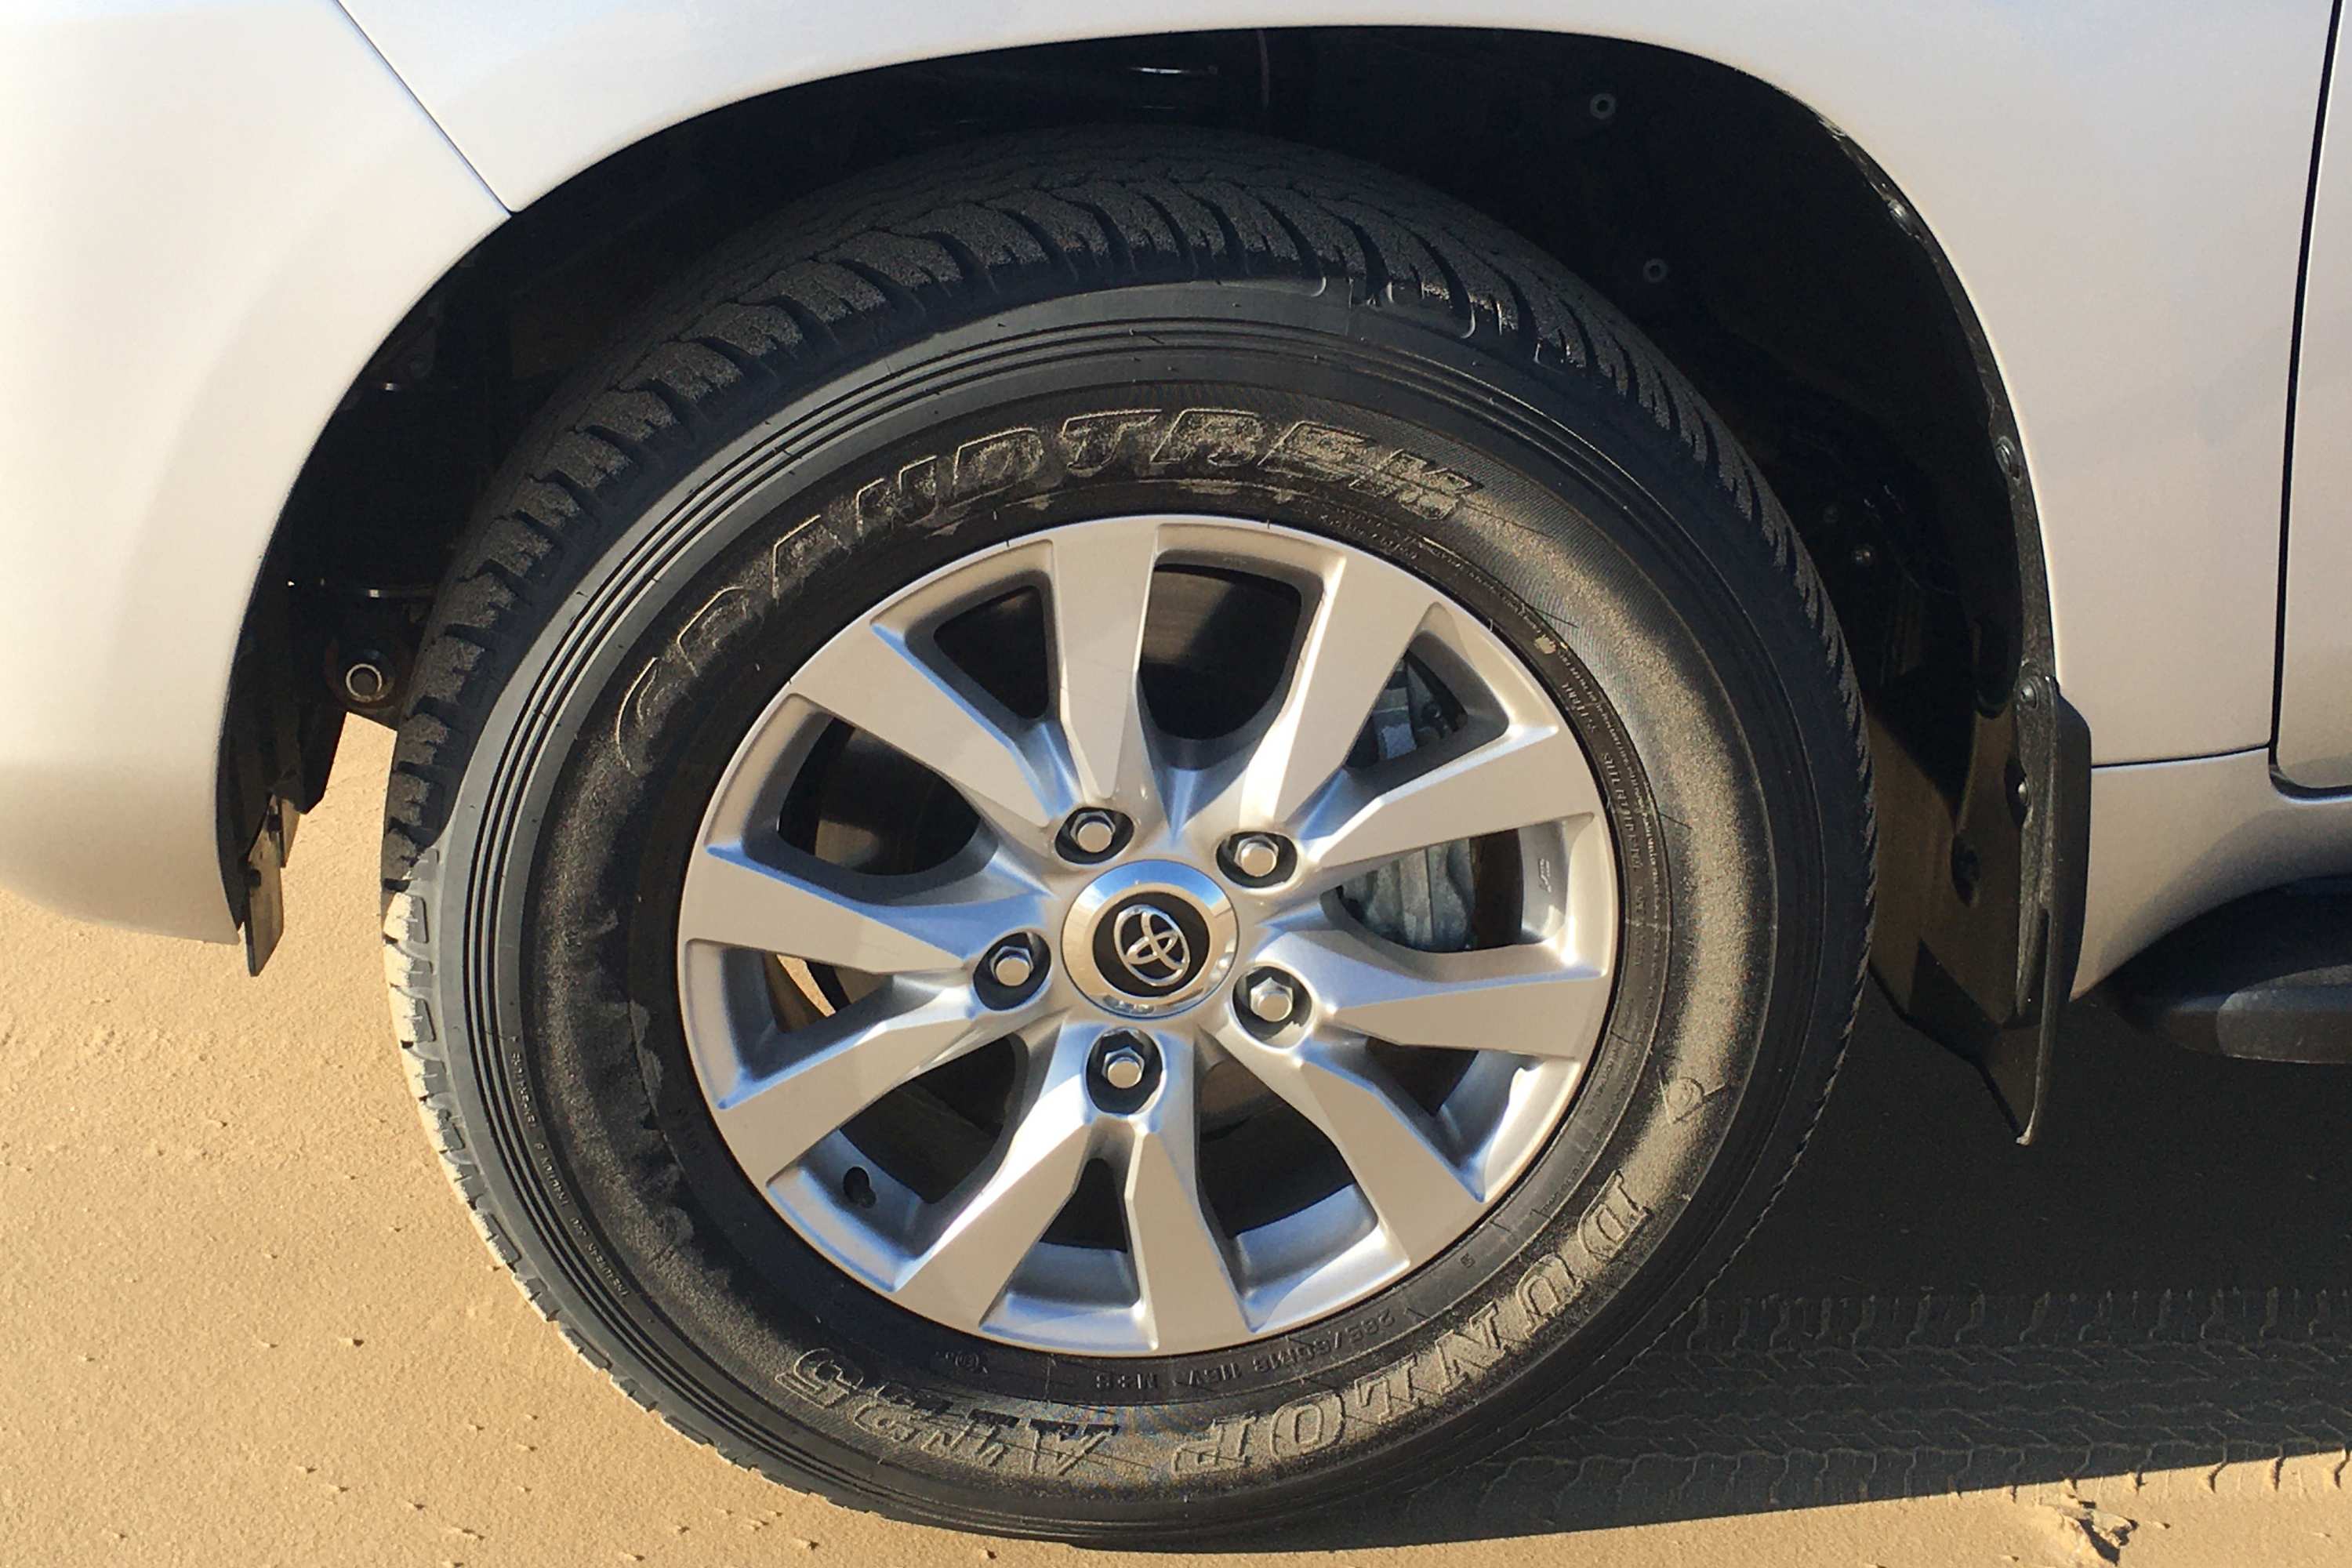 Toyota LandCruiser Sahara 2020 tyres